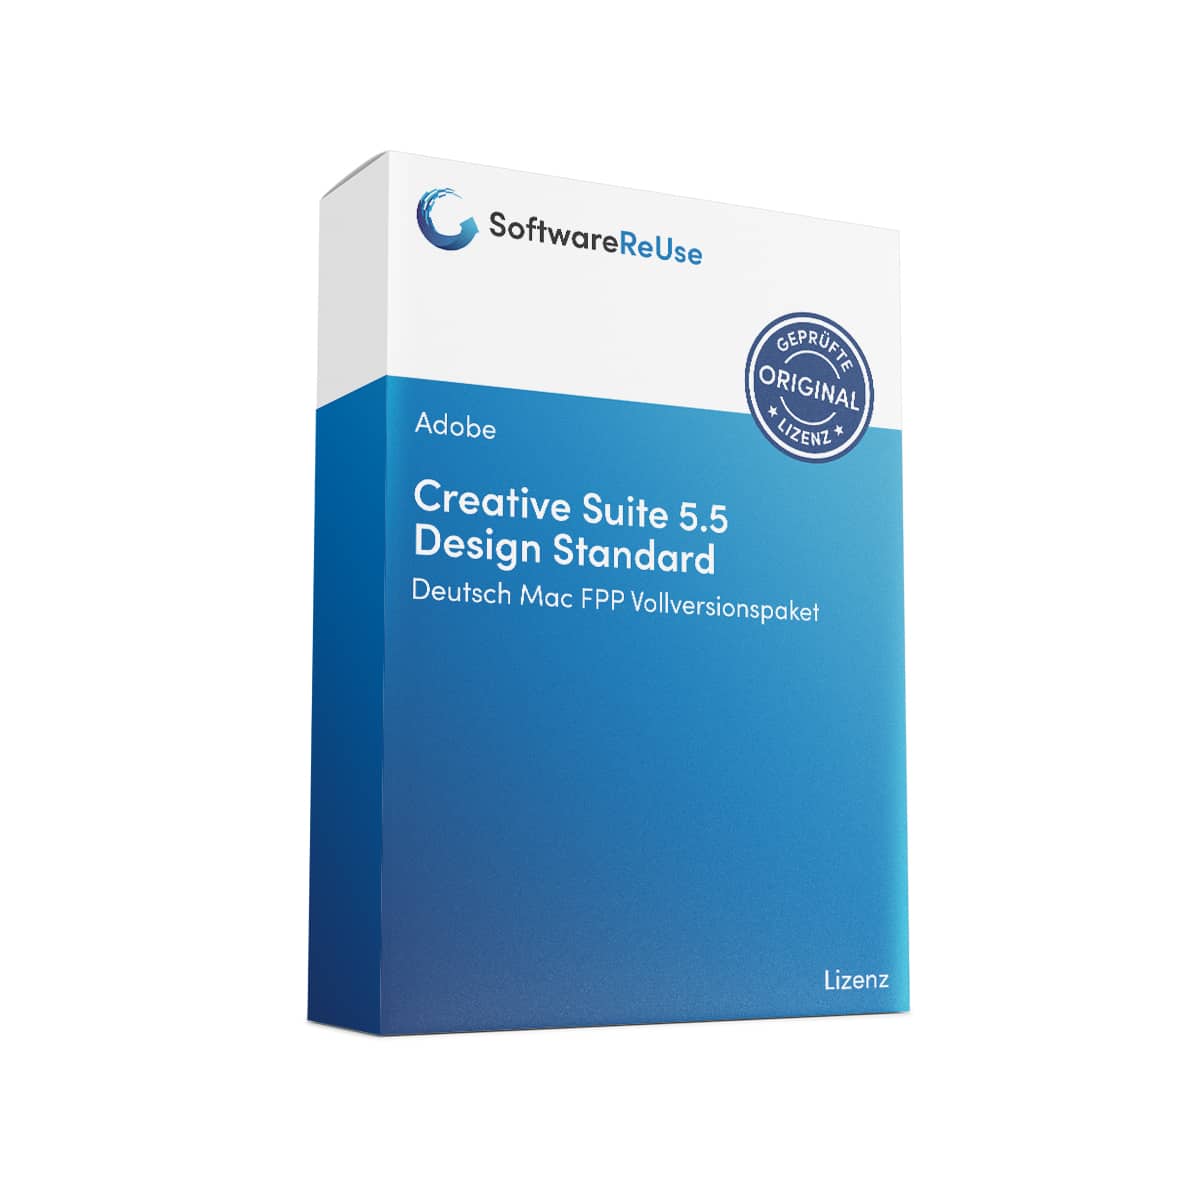 Creative Suite 5 5 Design Standard FPP Vollversionspaket DE8ealu0vDRoOef